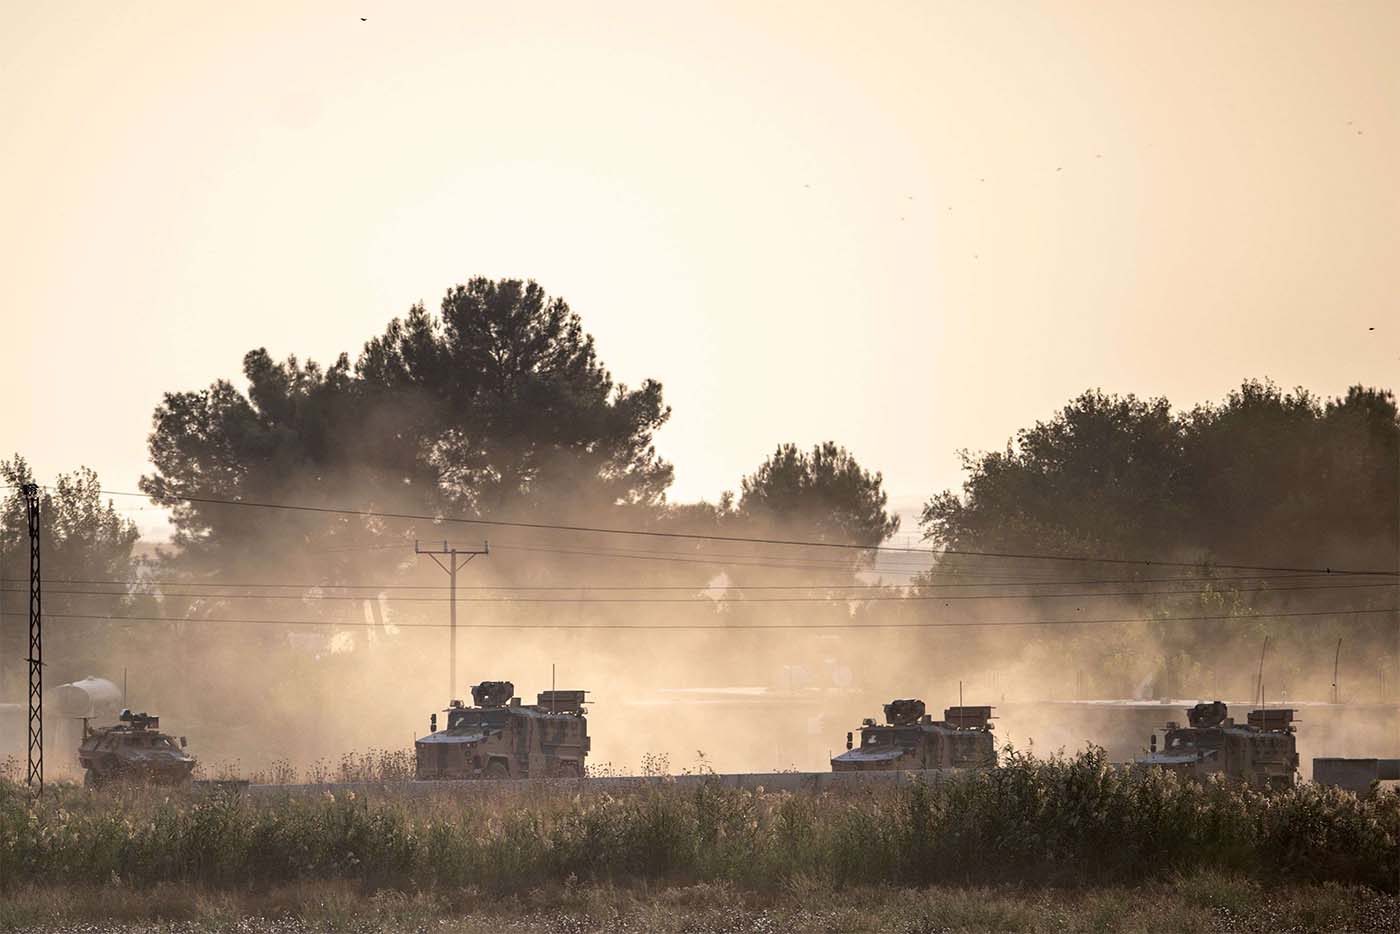 Turkish army vehicles